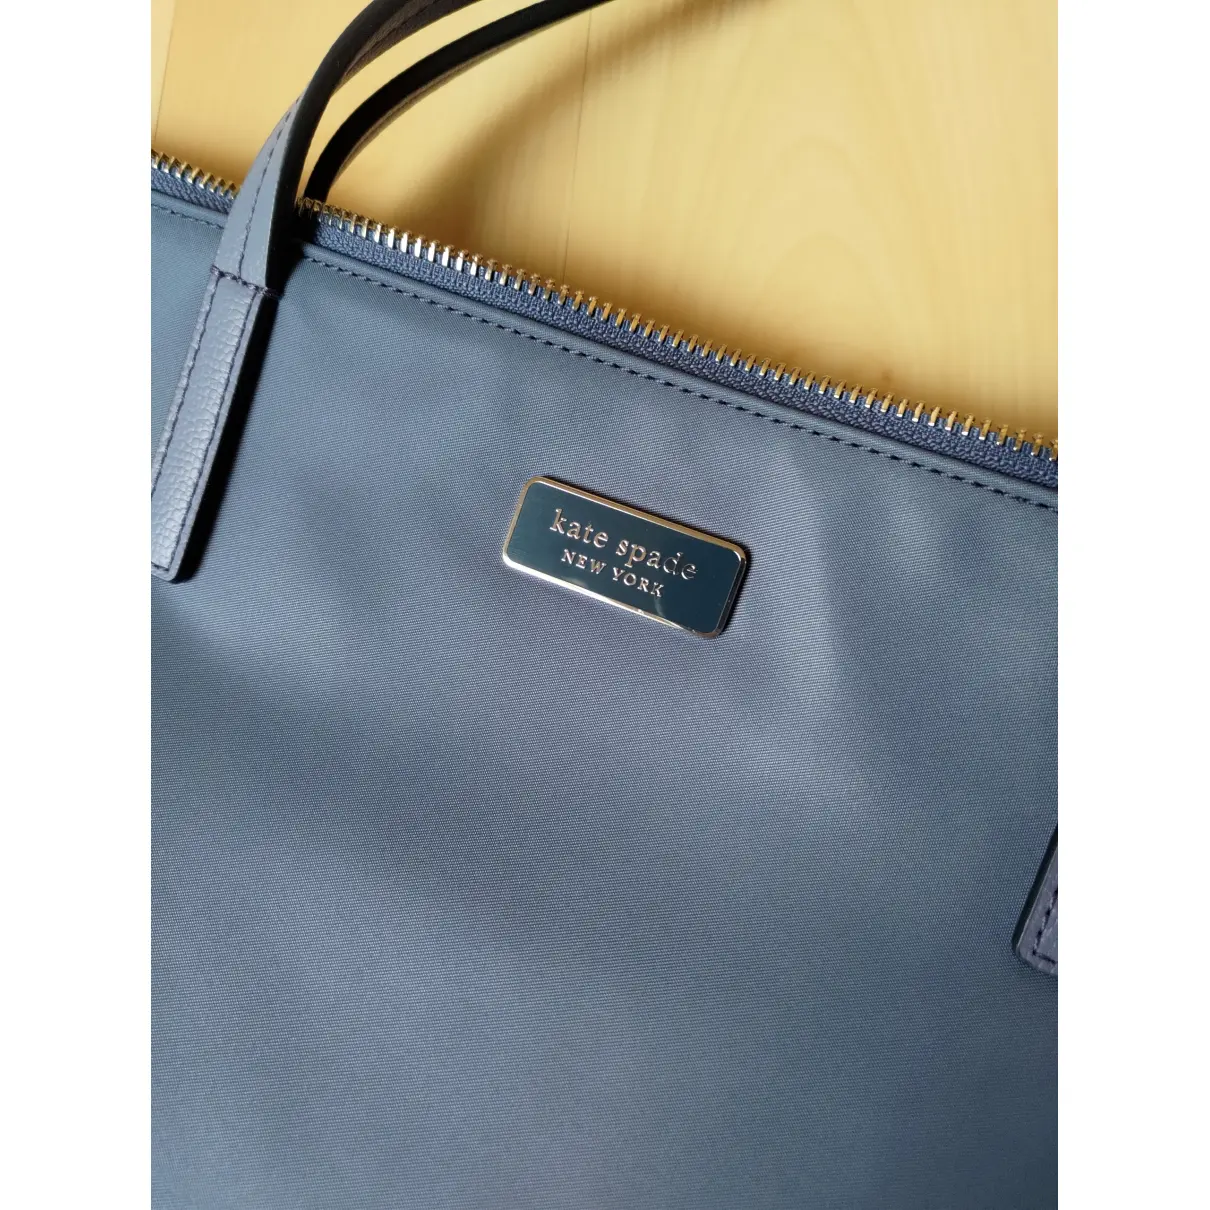 Buy Kate Spade Handbag online